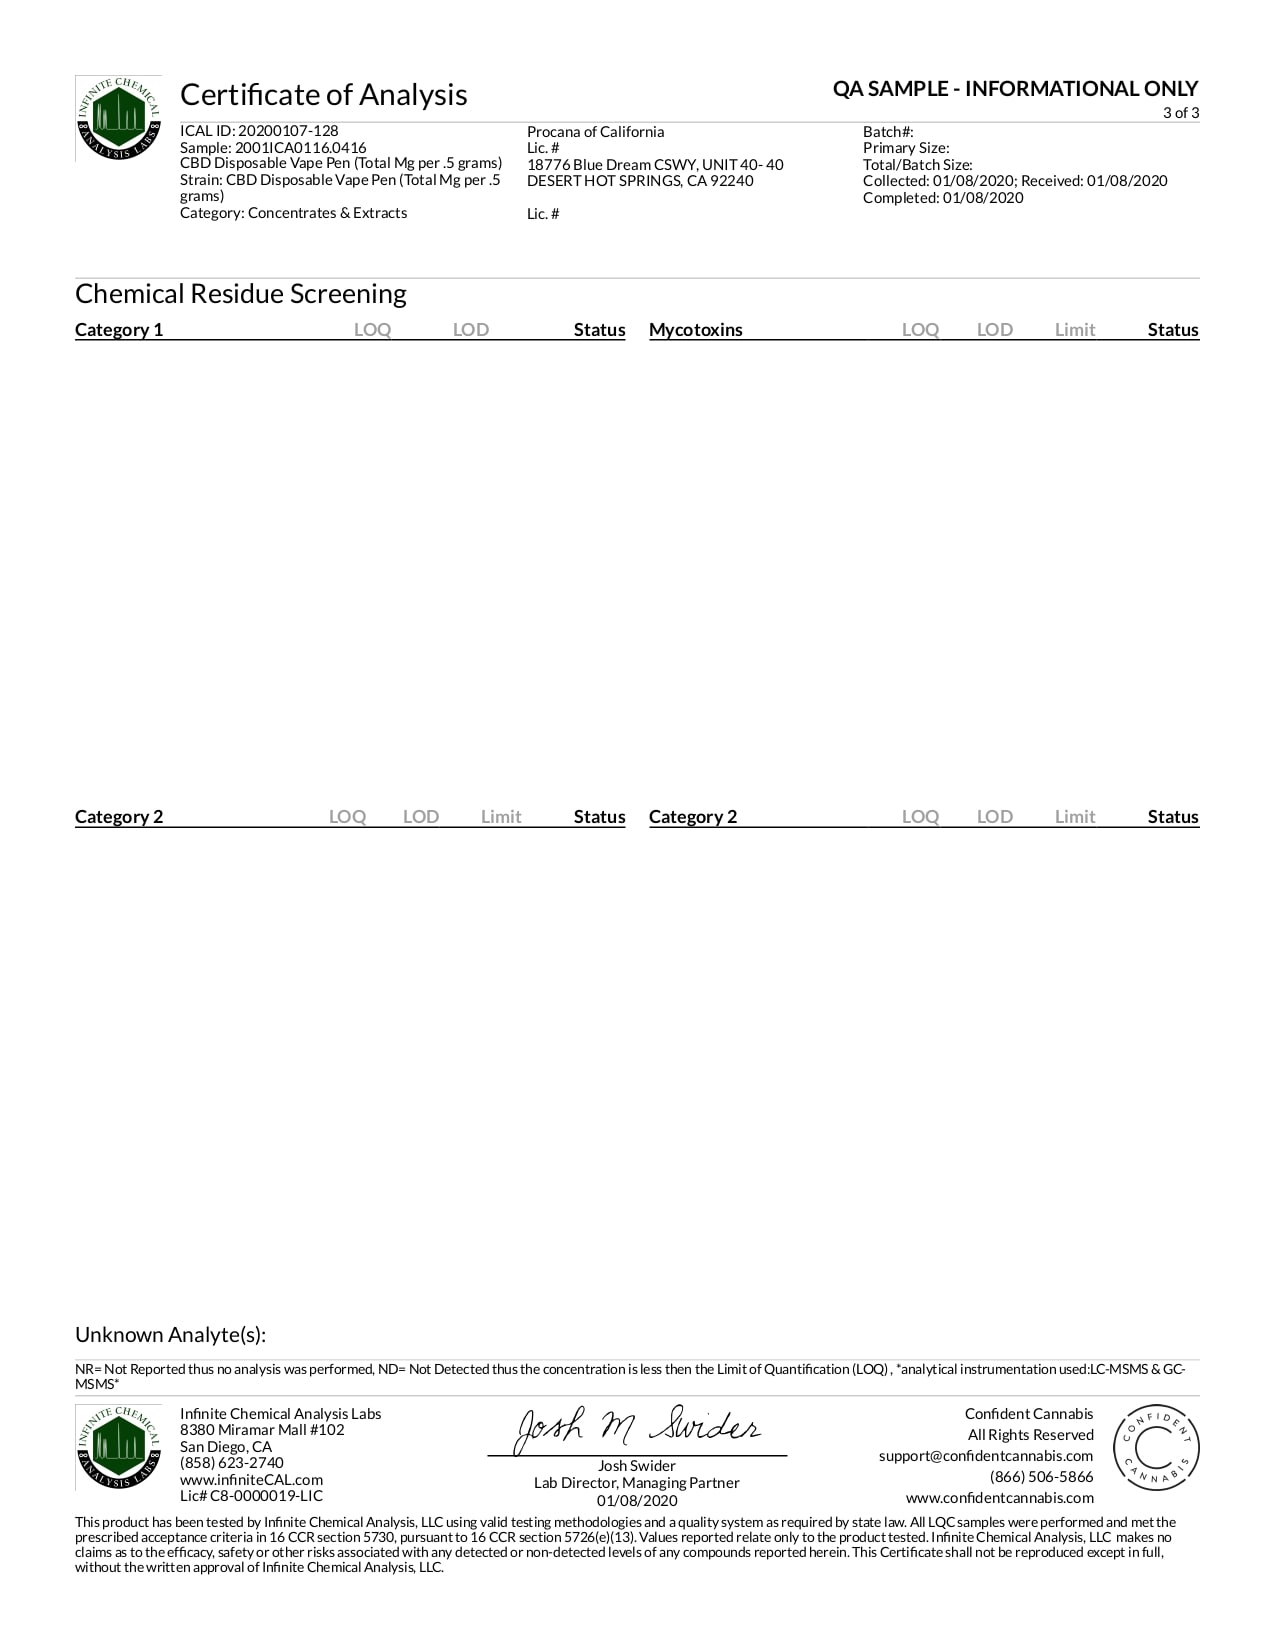 Procana CBD Disposable Vaporizer Lab Report Smooth Vanilla 200mg